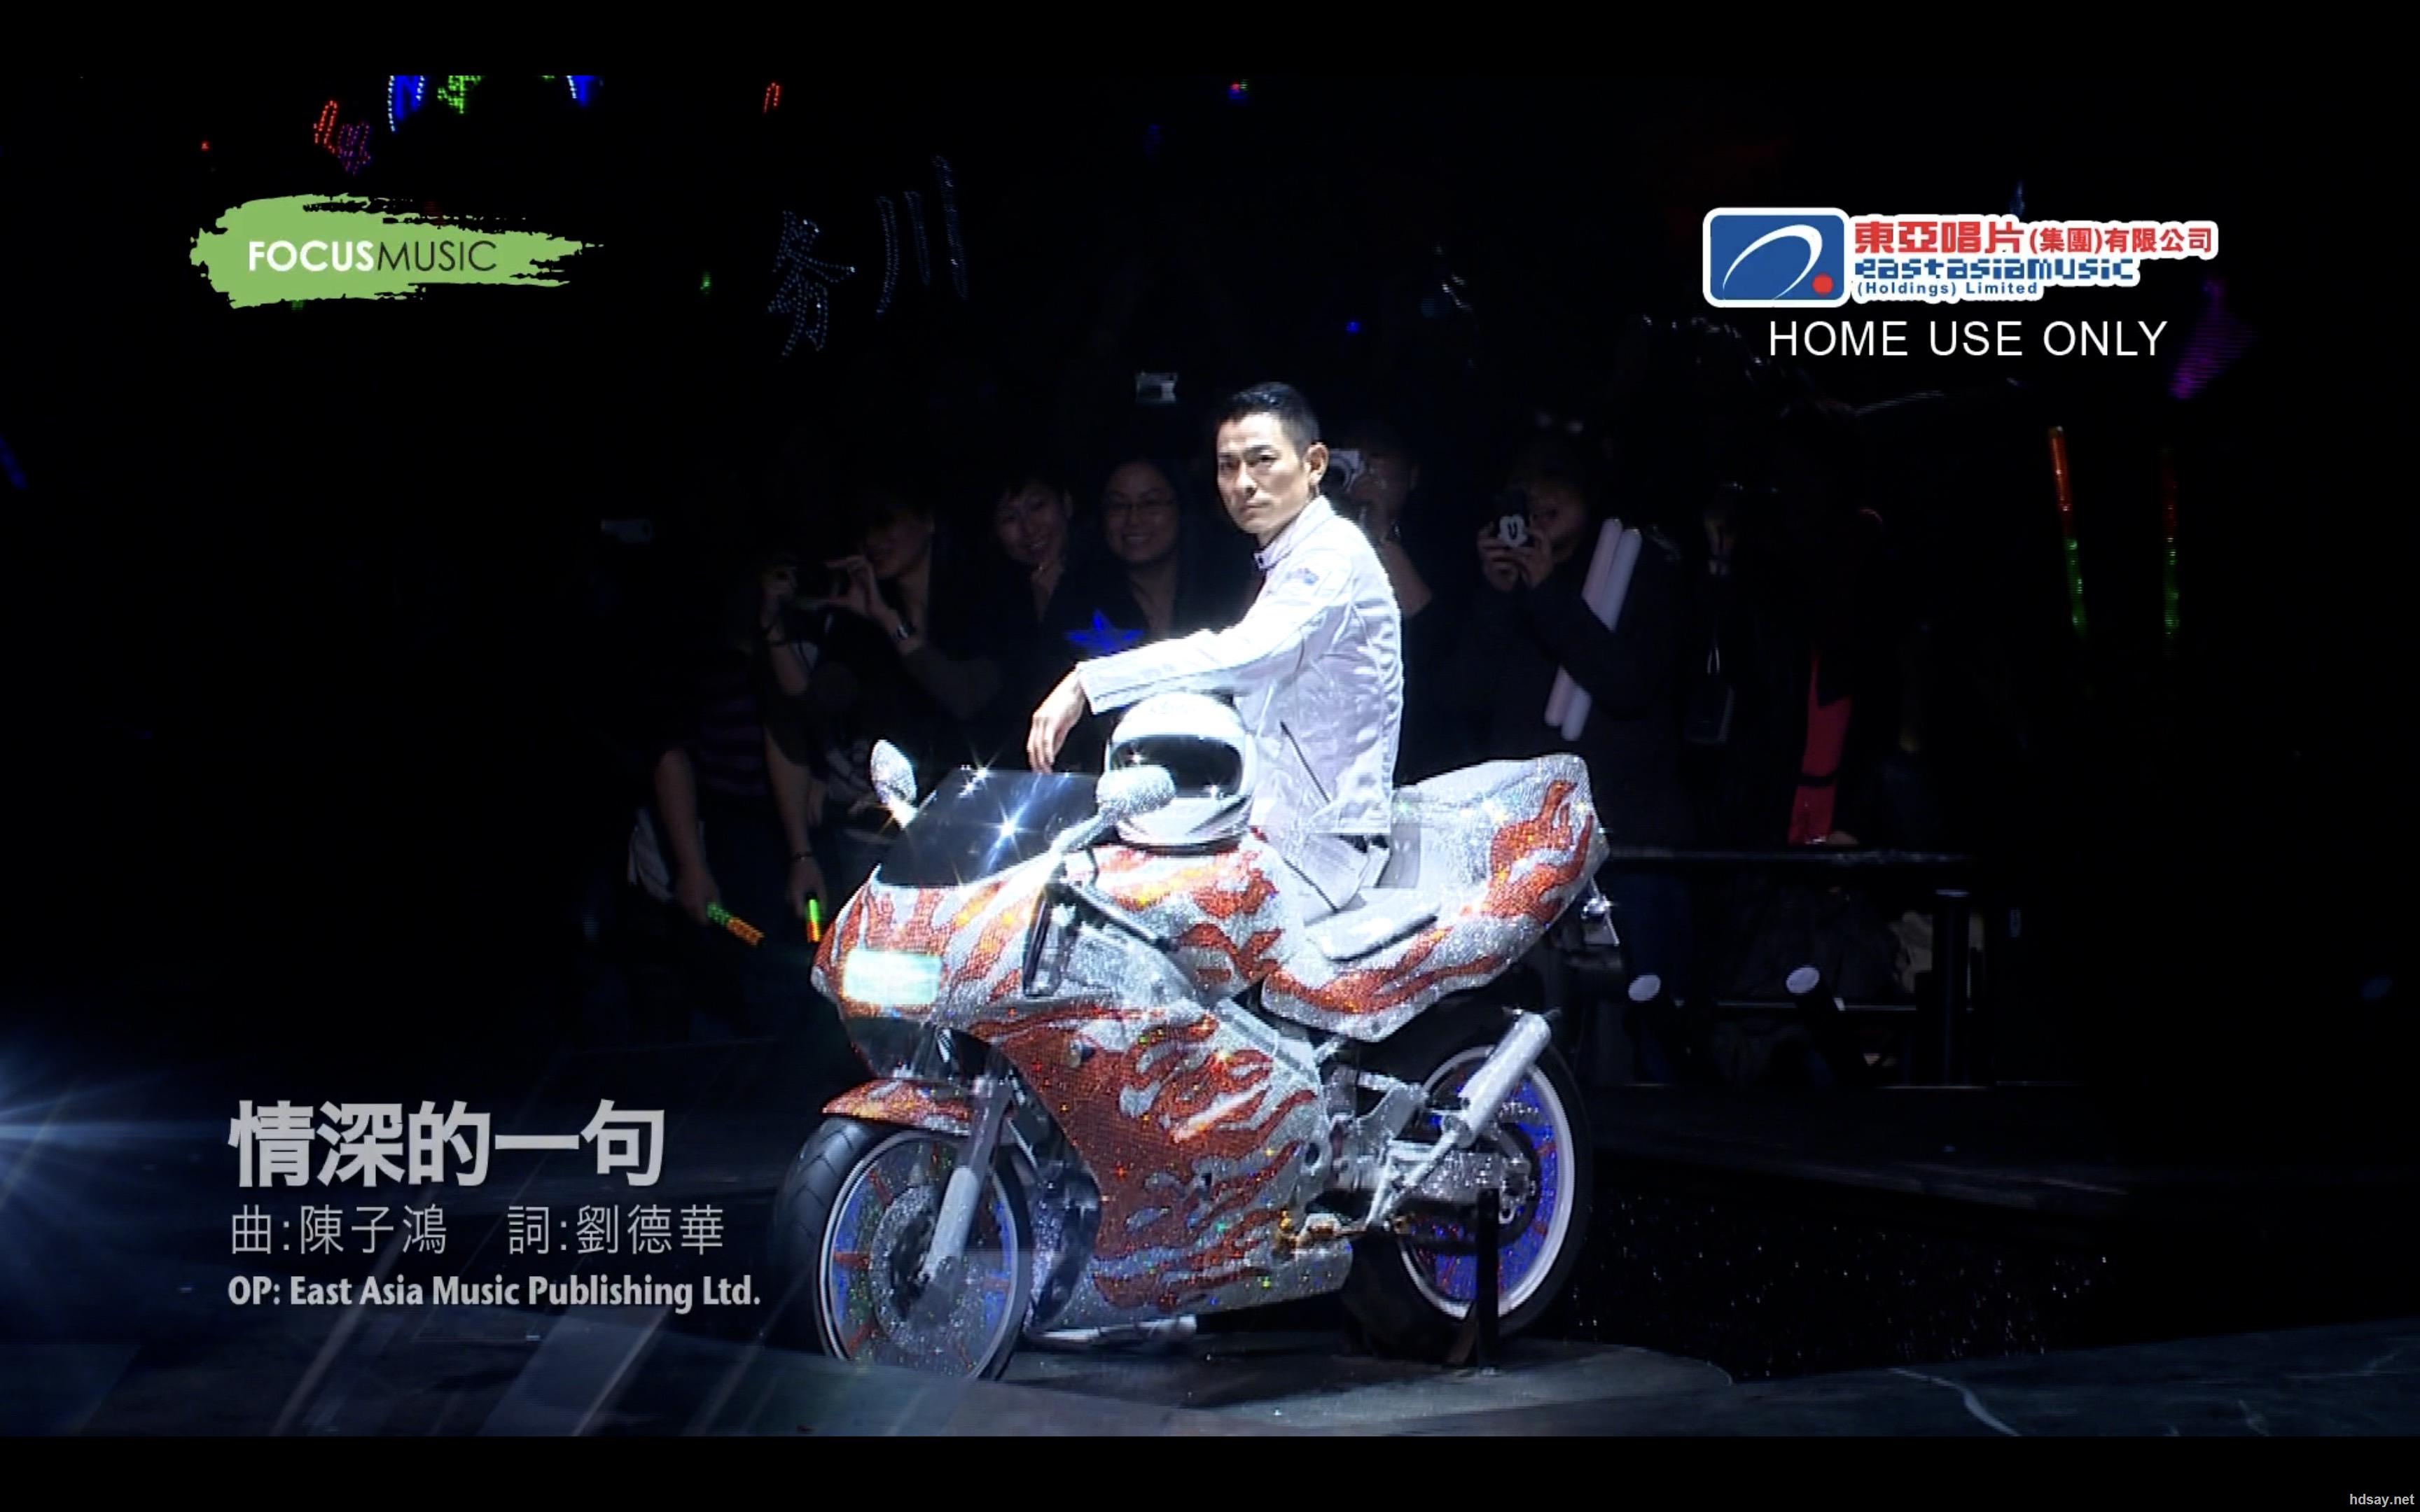 刘德华 震撼红馆跨年演唱会 Andy Lau Unforgettable Concert 2010